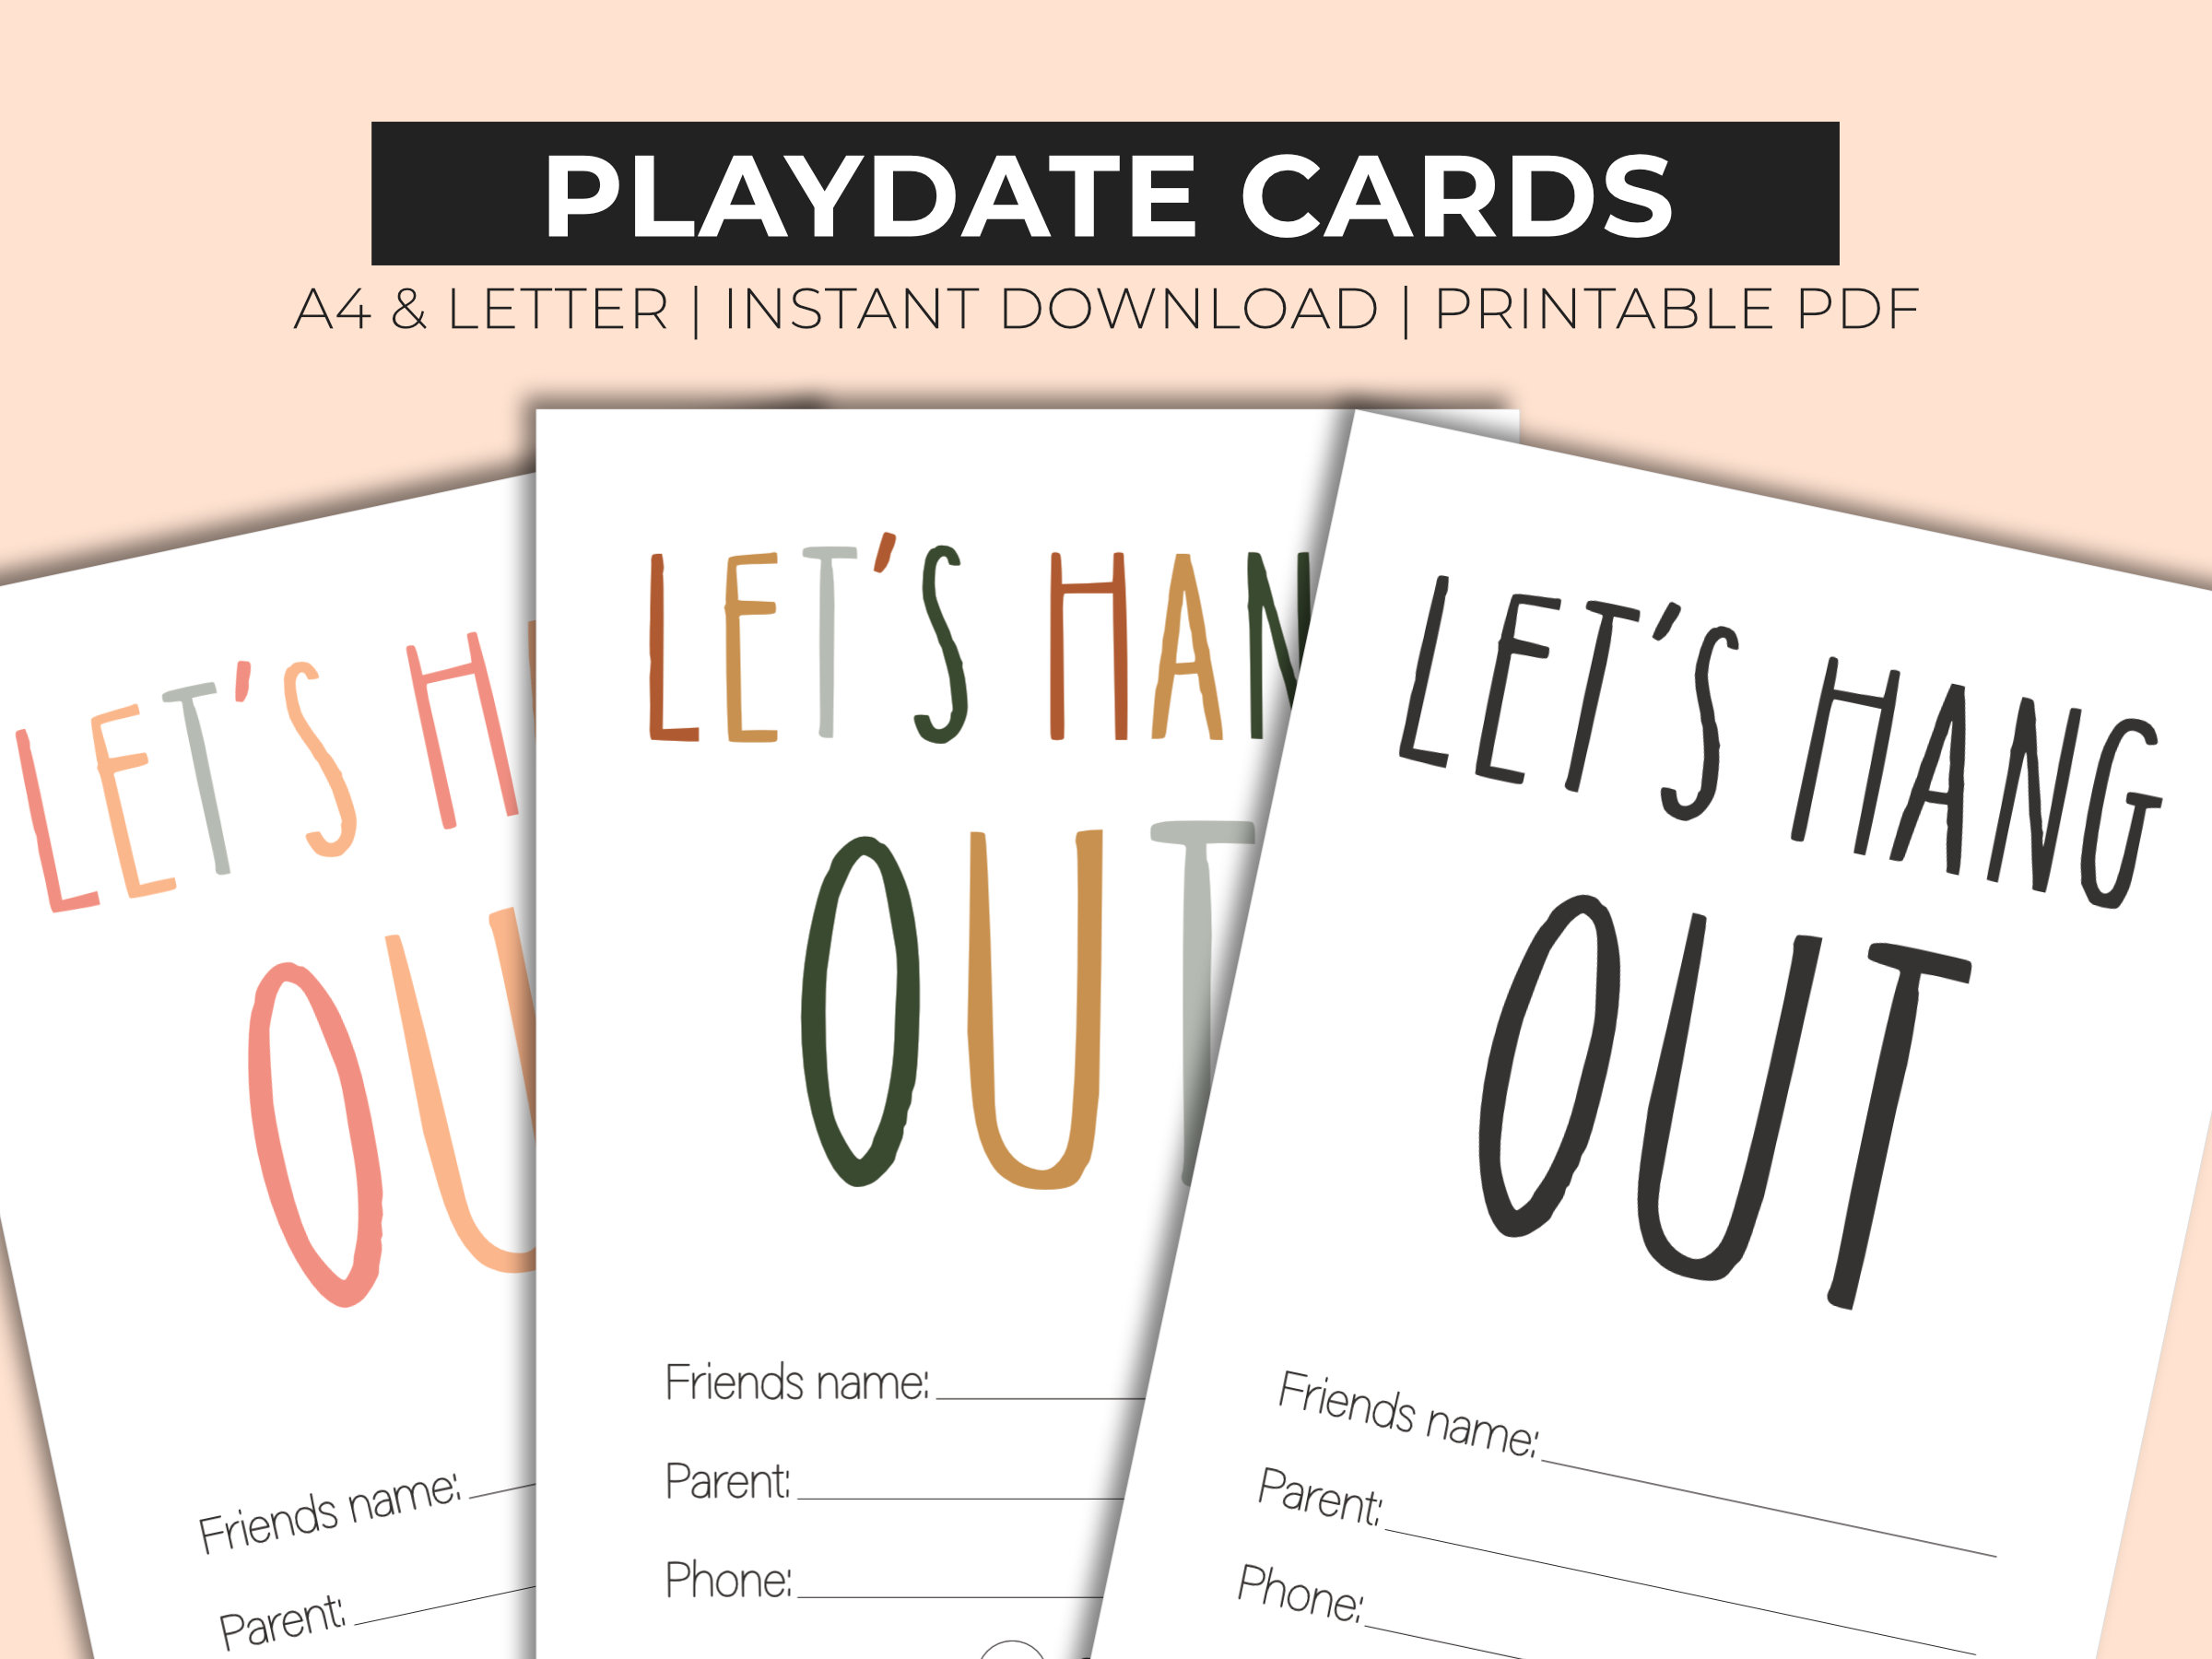 Printables – Let's Play School